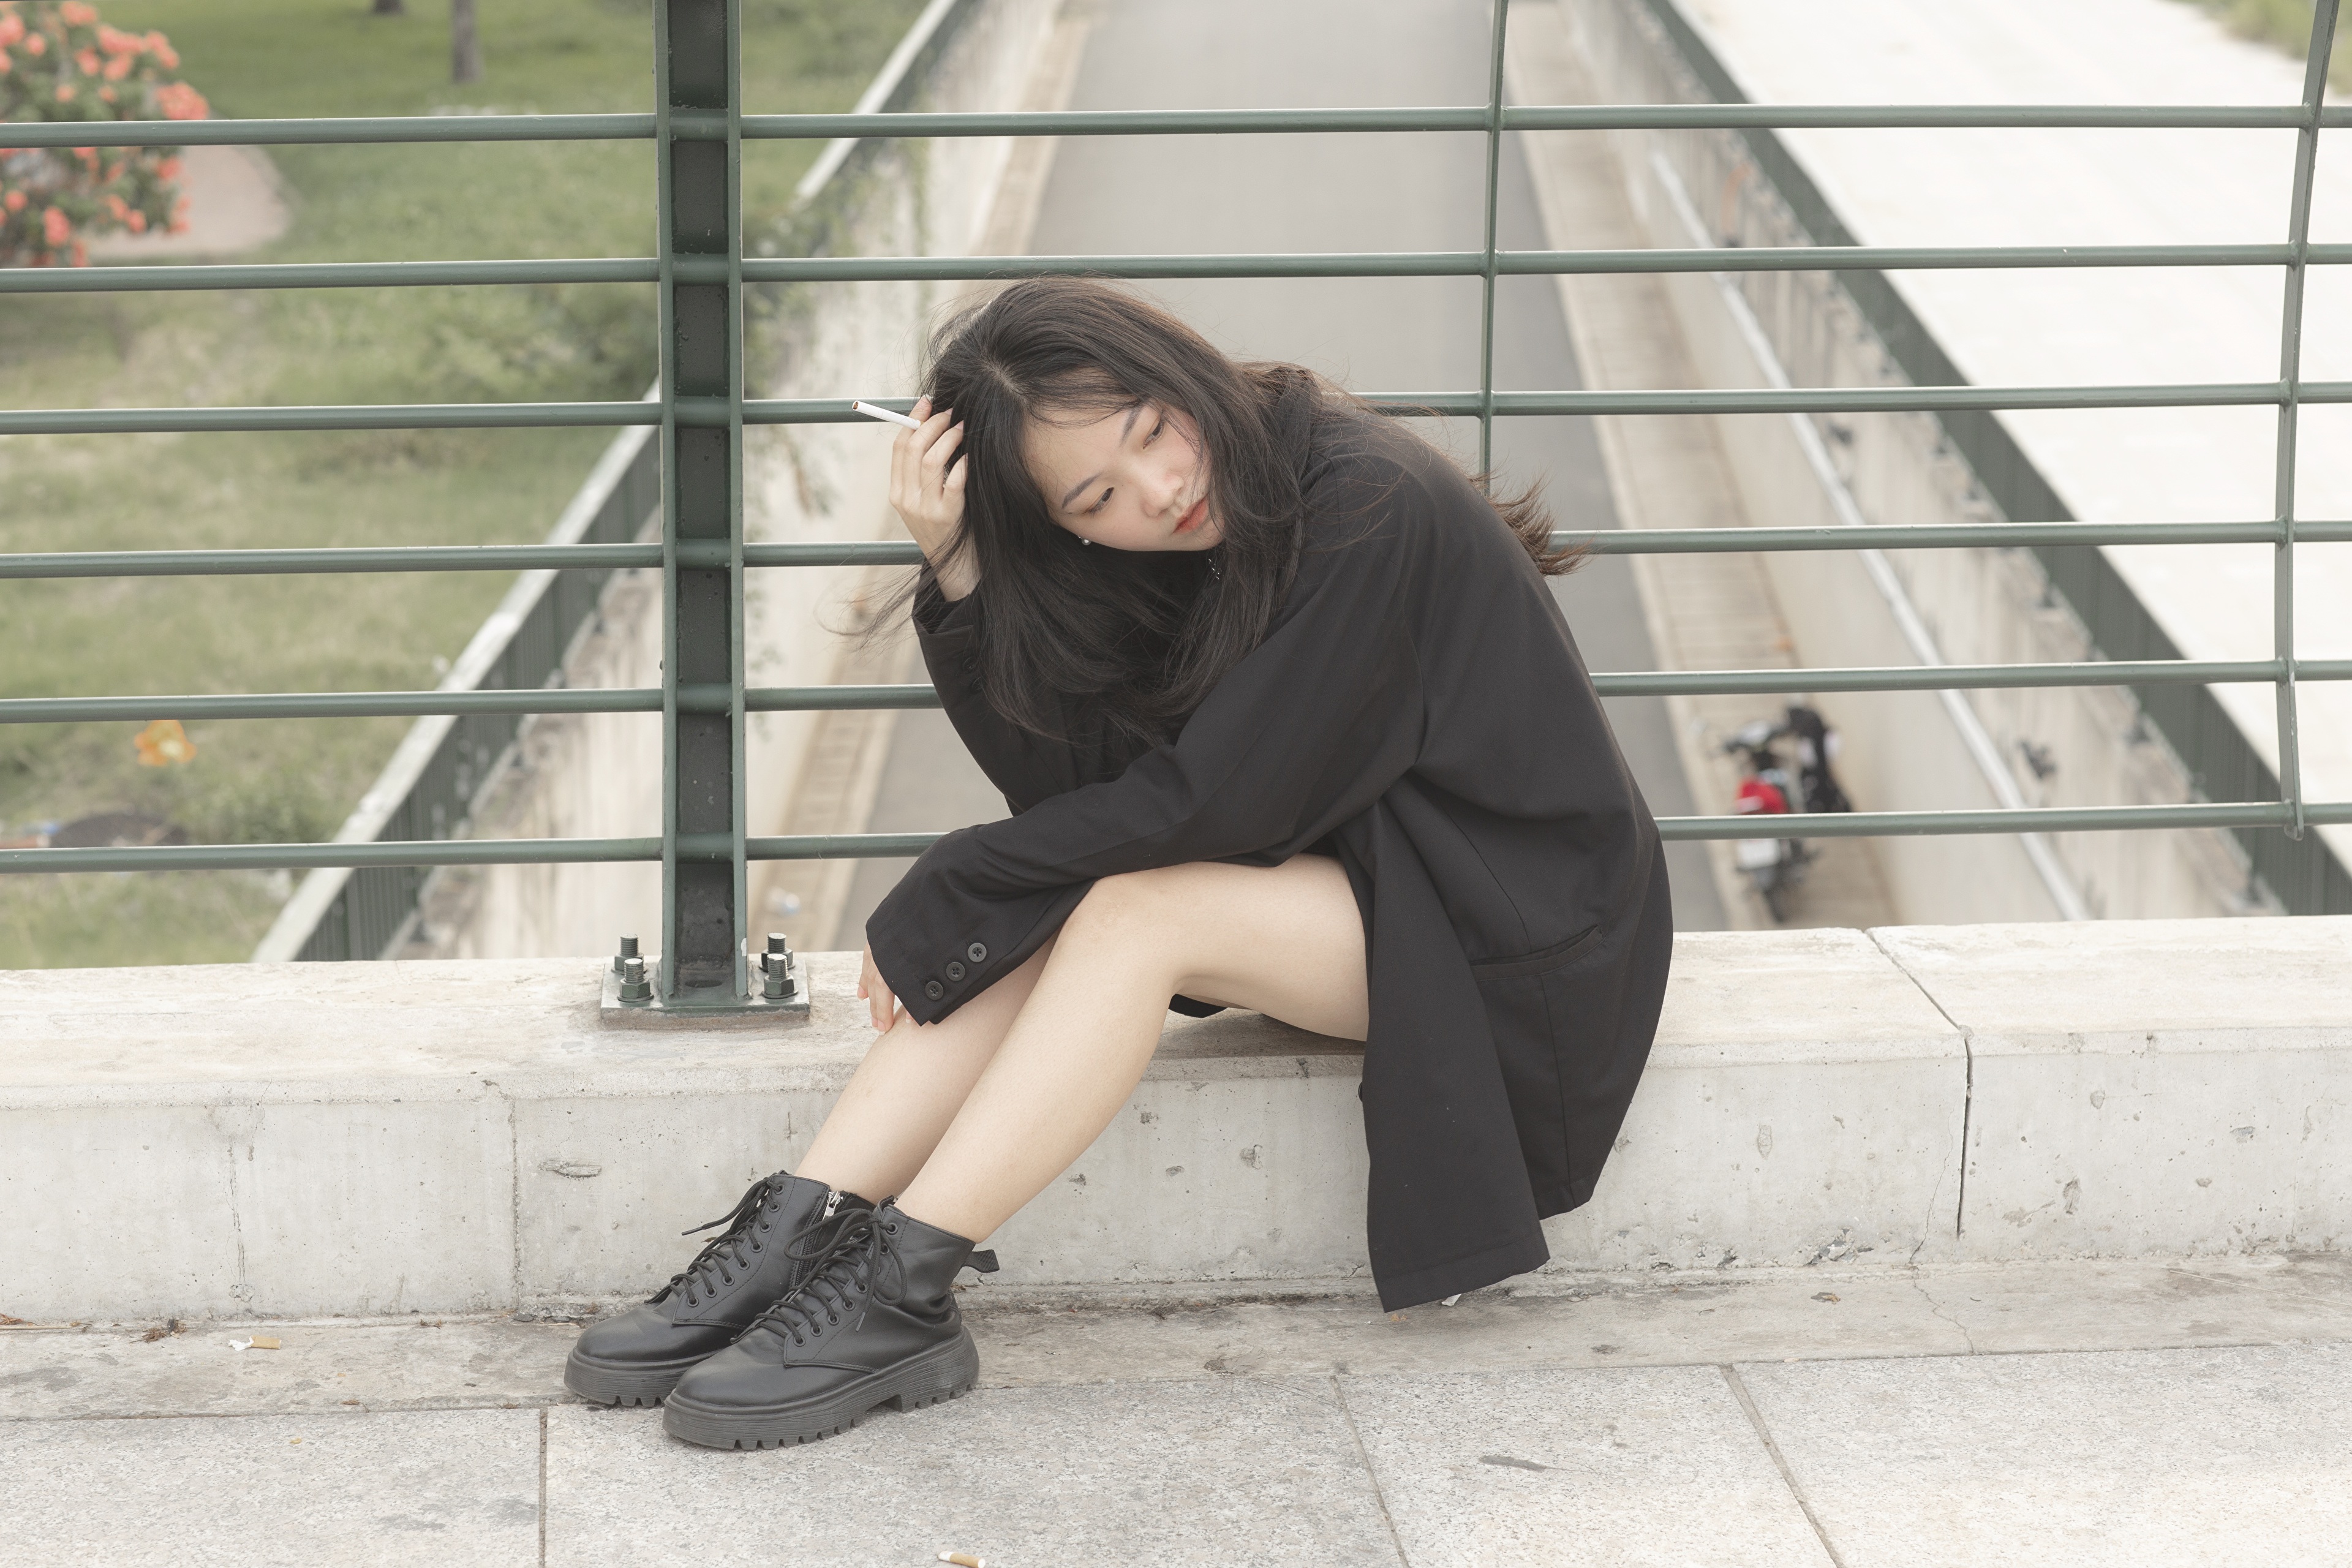 Asian Model Women Long Hair Dark Hair Railings Sitting Passage Cigarettes Black Blazer Shoes Depth O 3840x2560